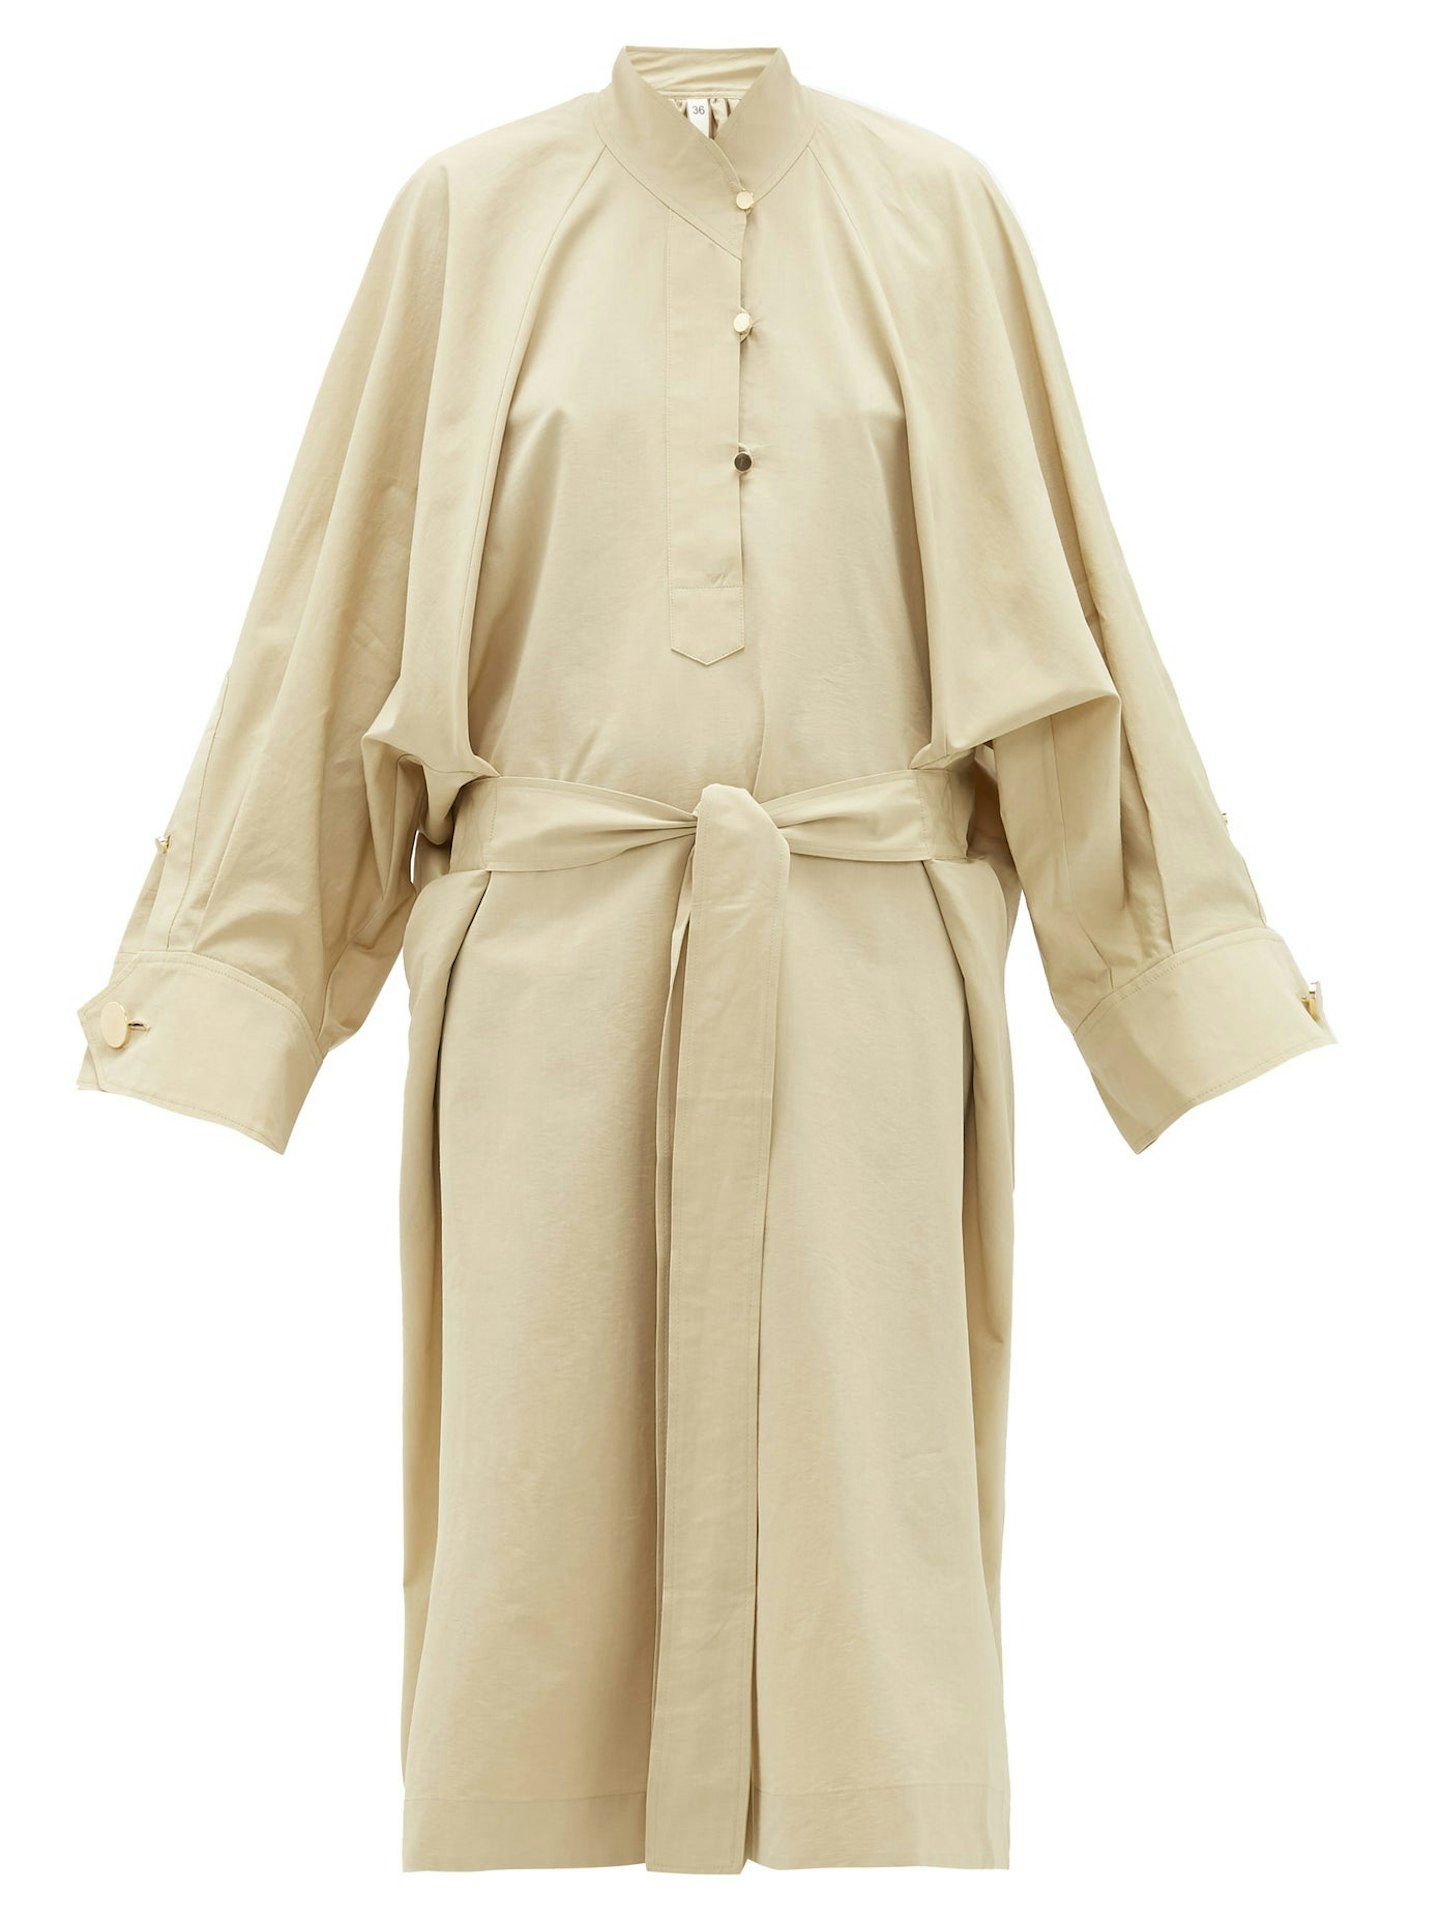 Cotton Dress, £1235, Petar Petrov